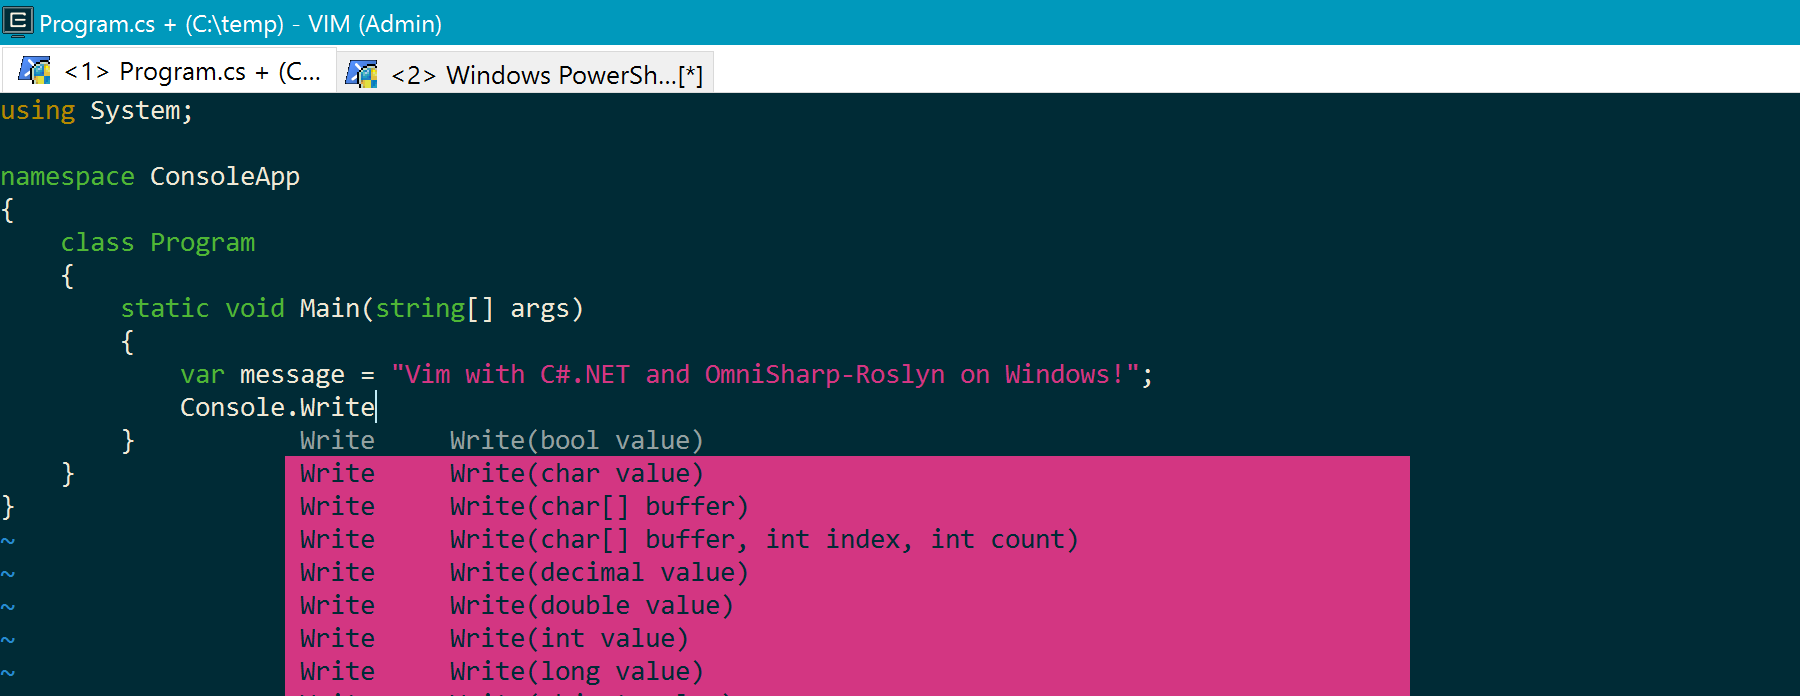 Vim with C#.NET Core and OmniSharp-Roslyn on Windows